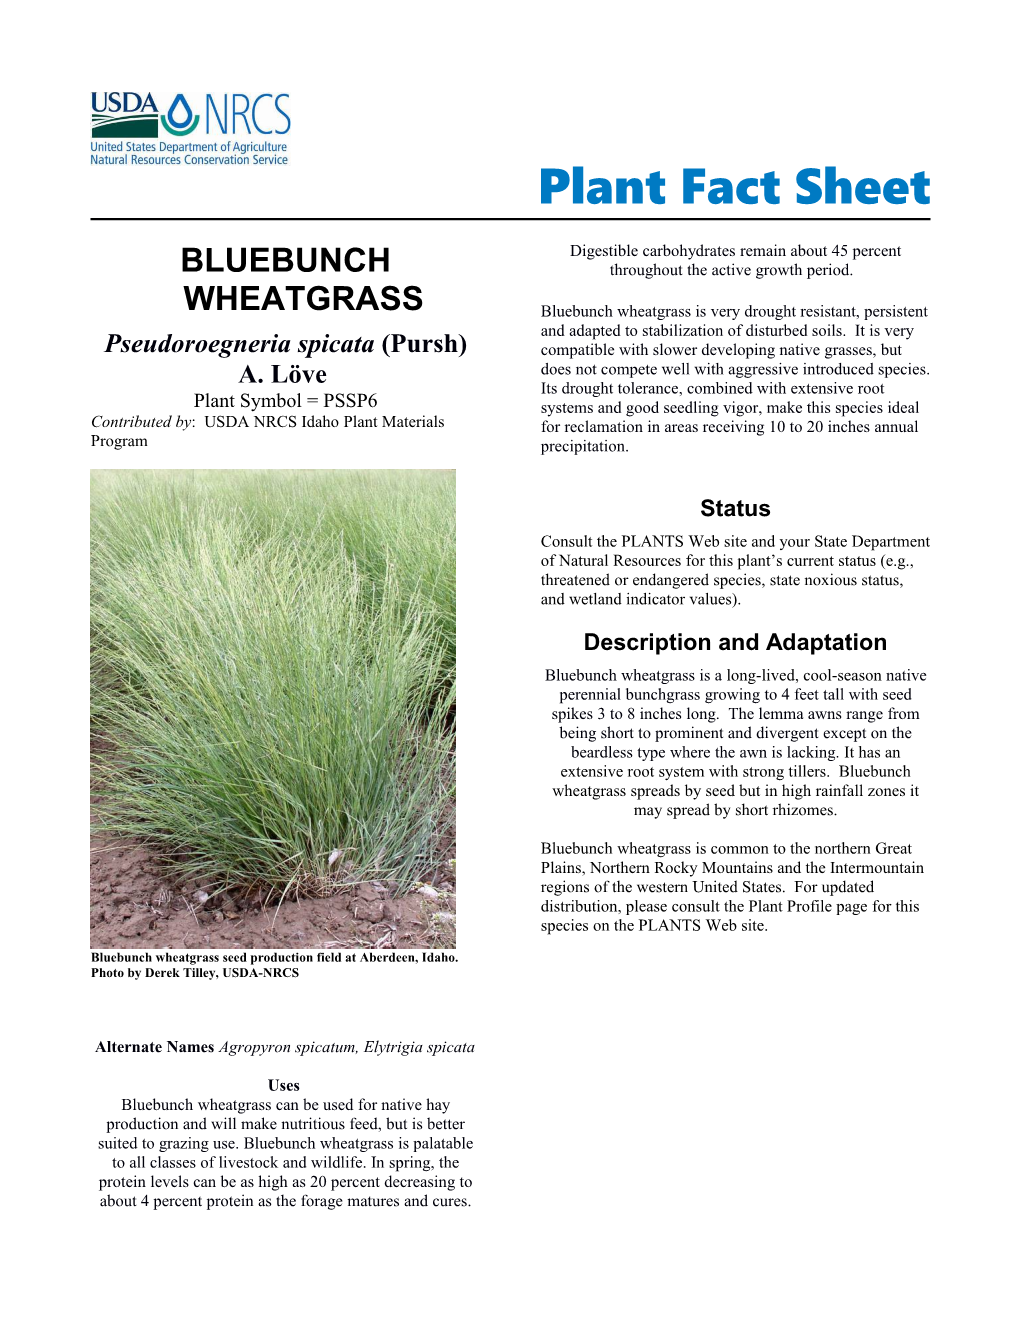 Plant Fact Sheet for Bluebunch Wheatgrass (Pseudoroegneria Spicata)